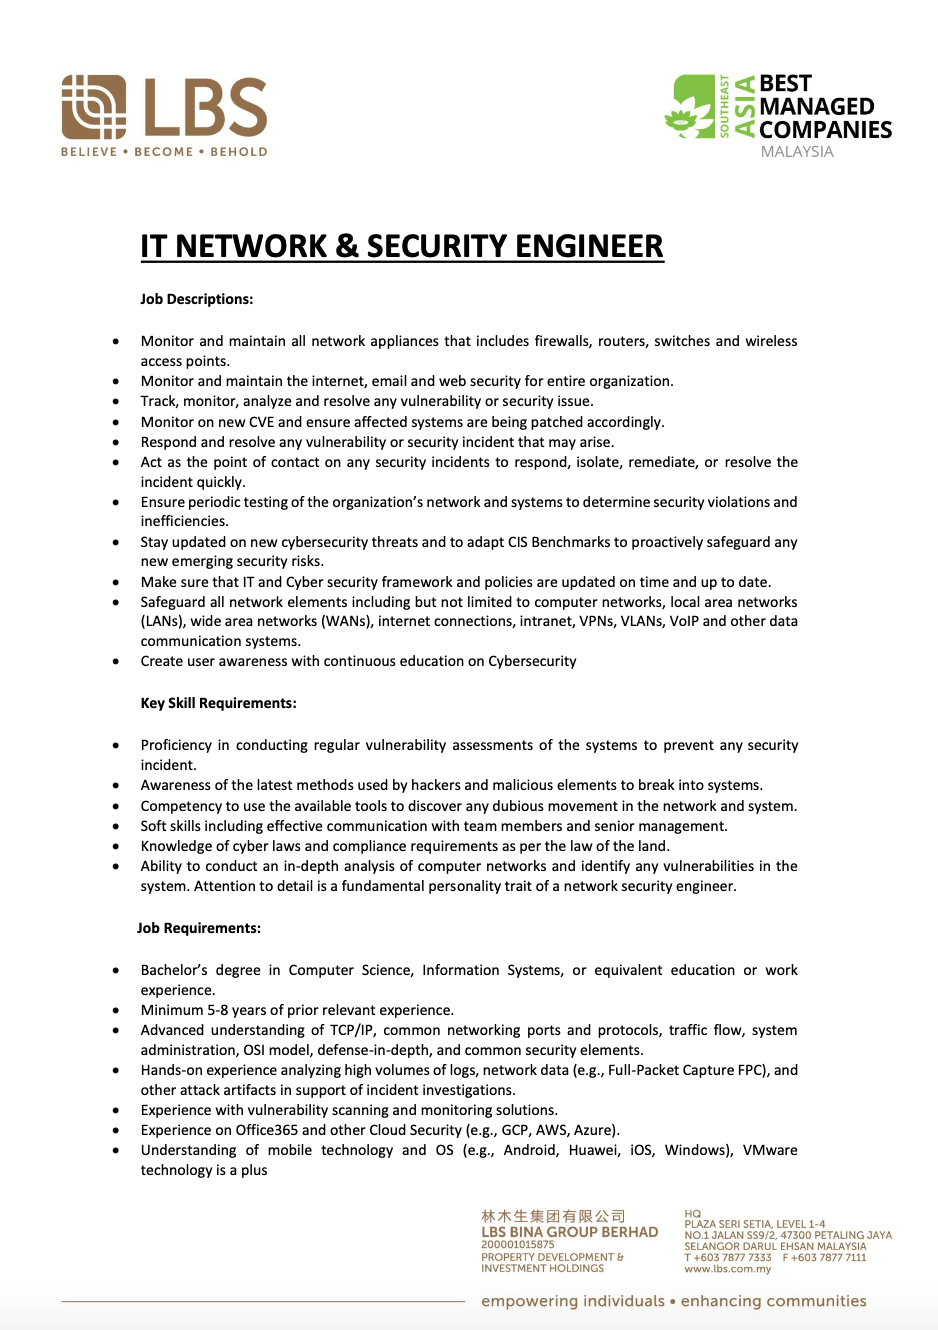 IT Network & Security Engineer 